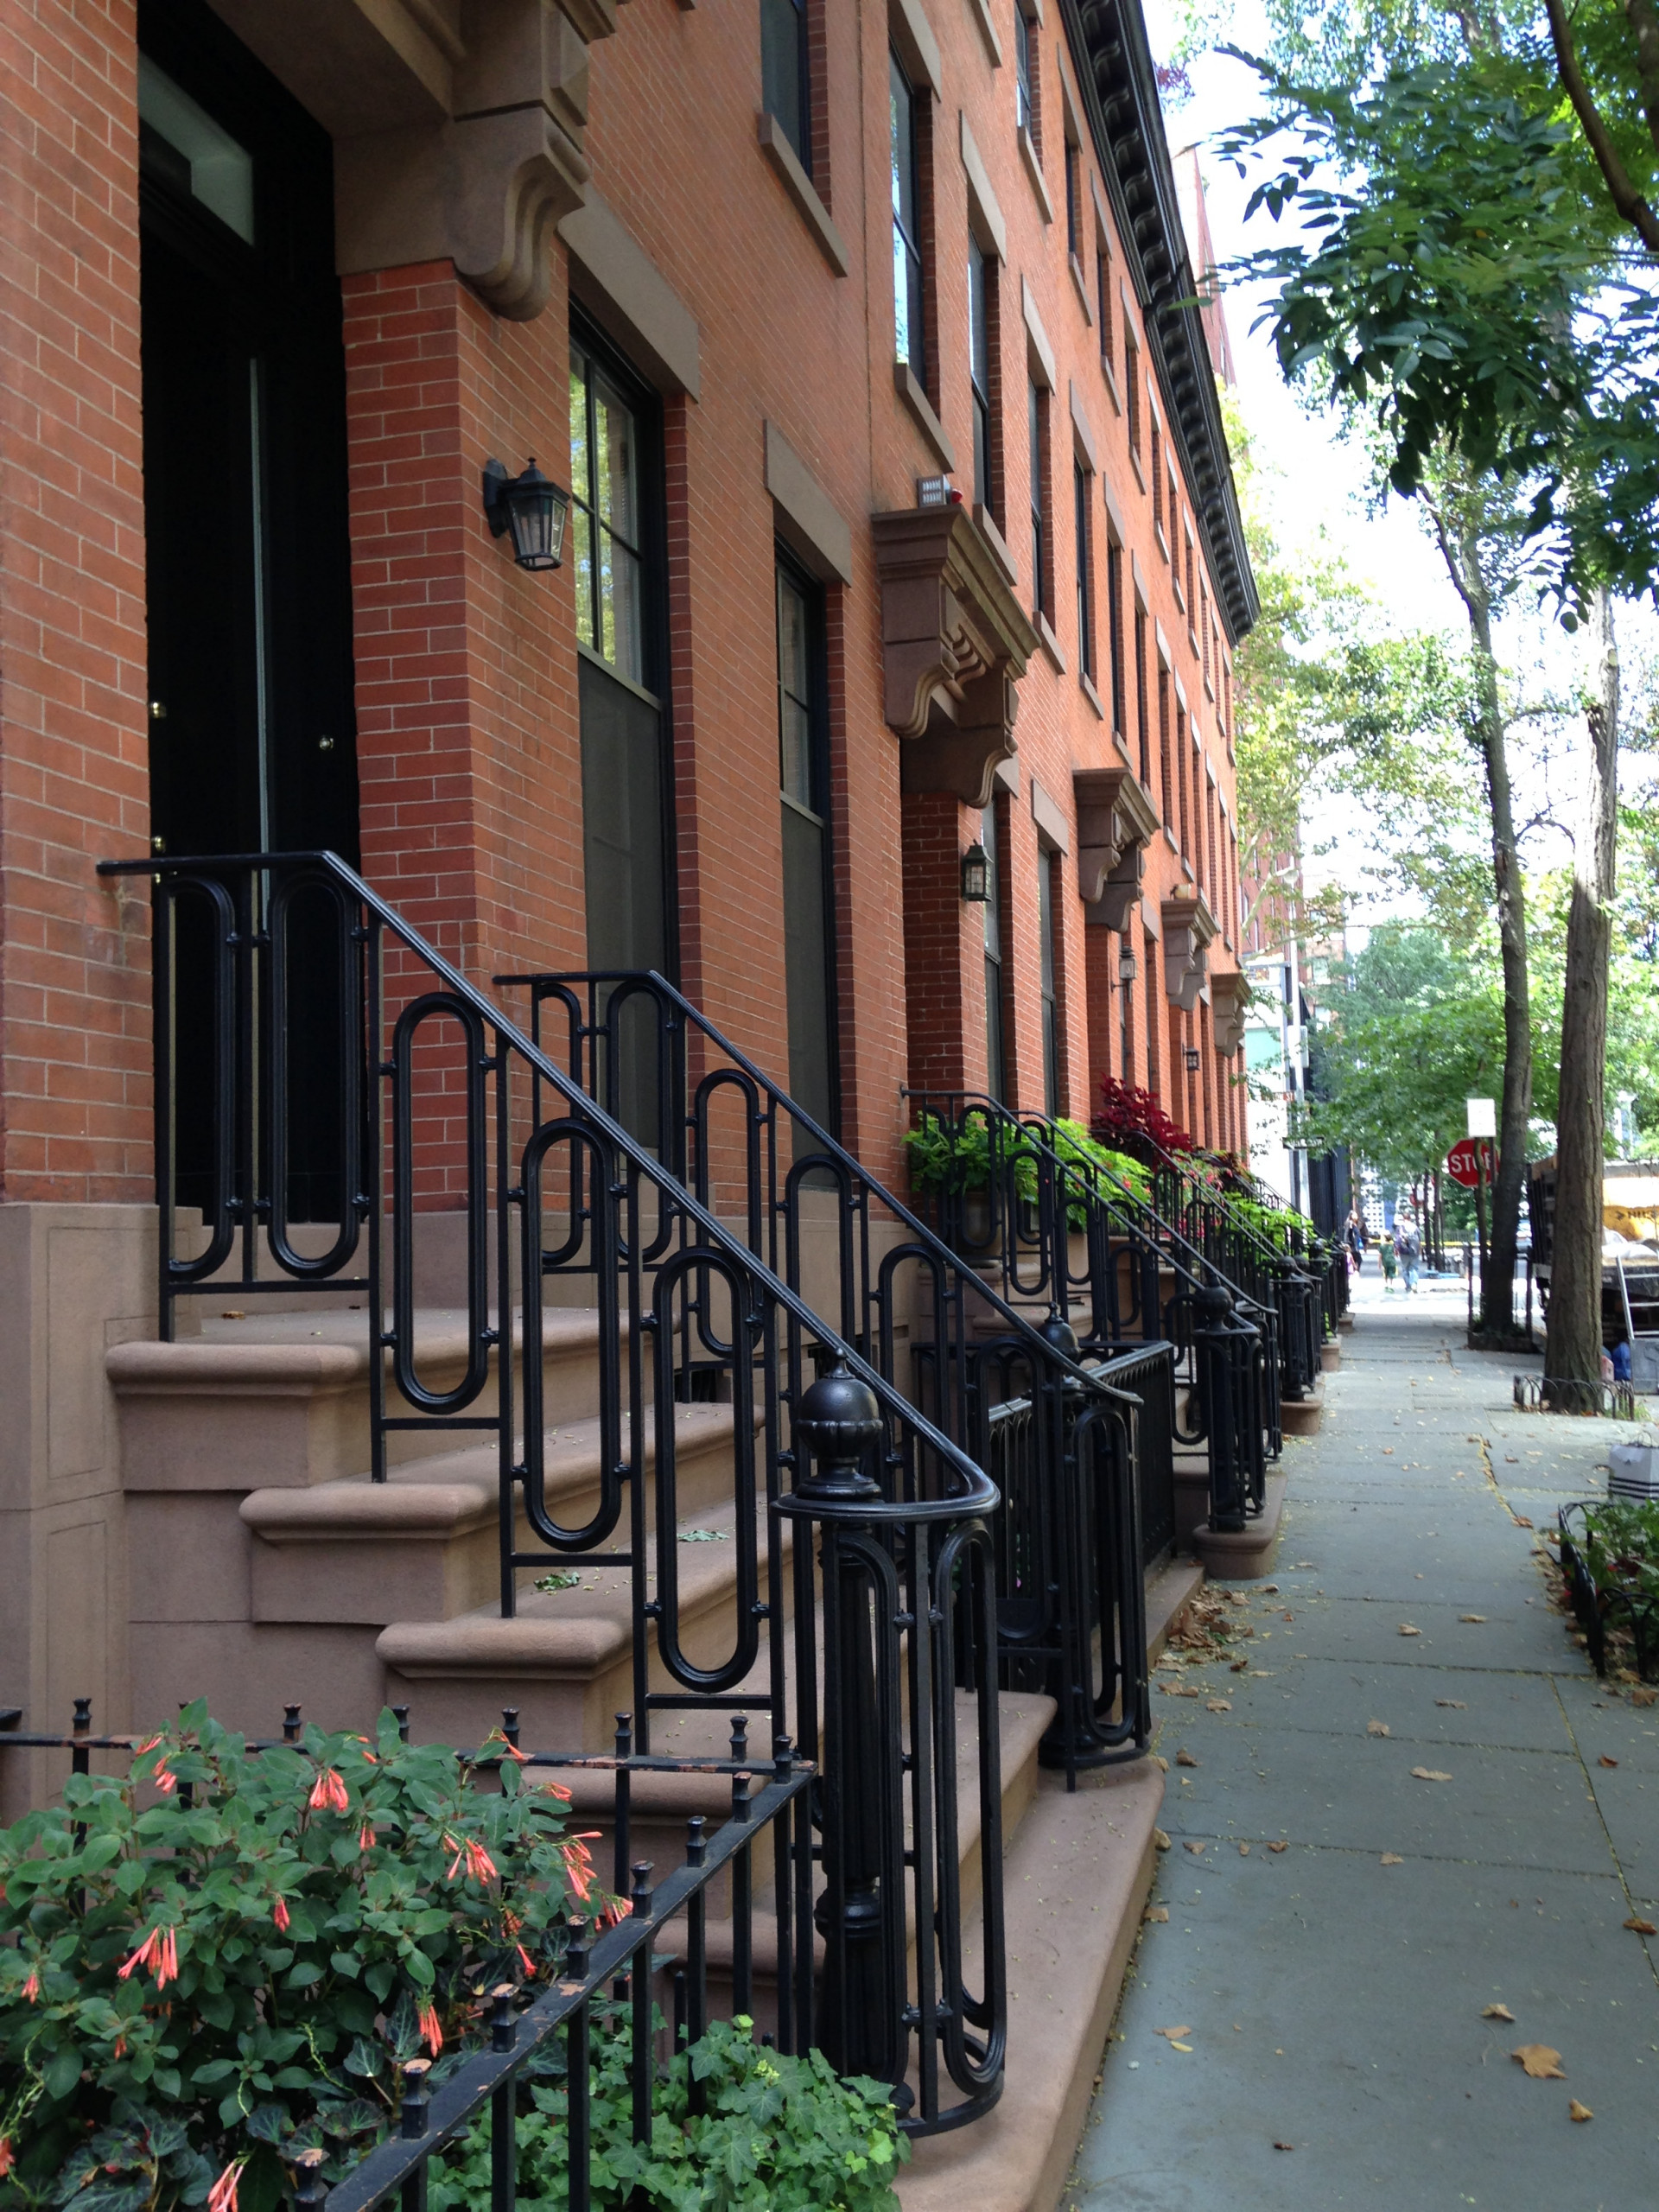 Brooklyn Heights Brick Row House: Bride's Row